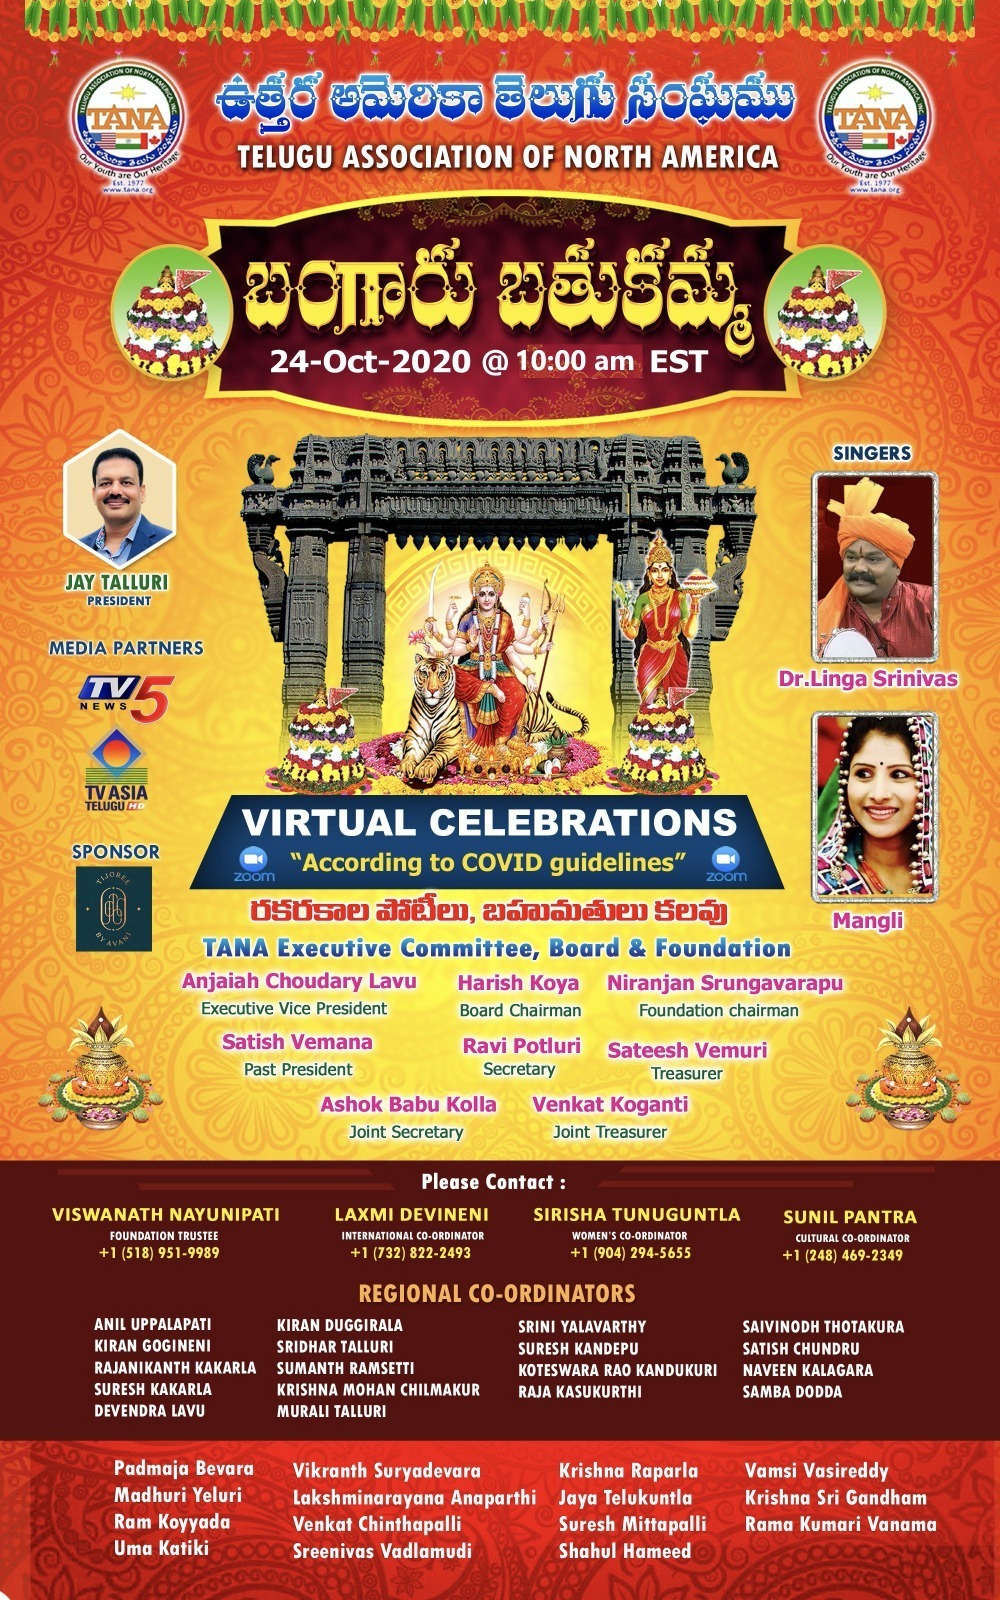 Bathukamma online virtual event